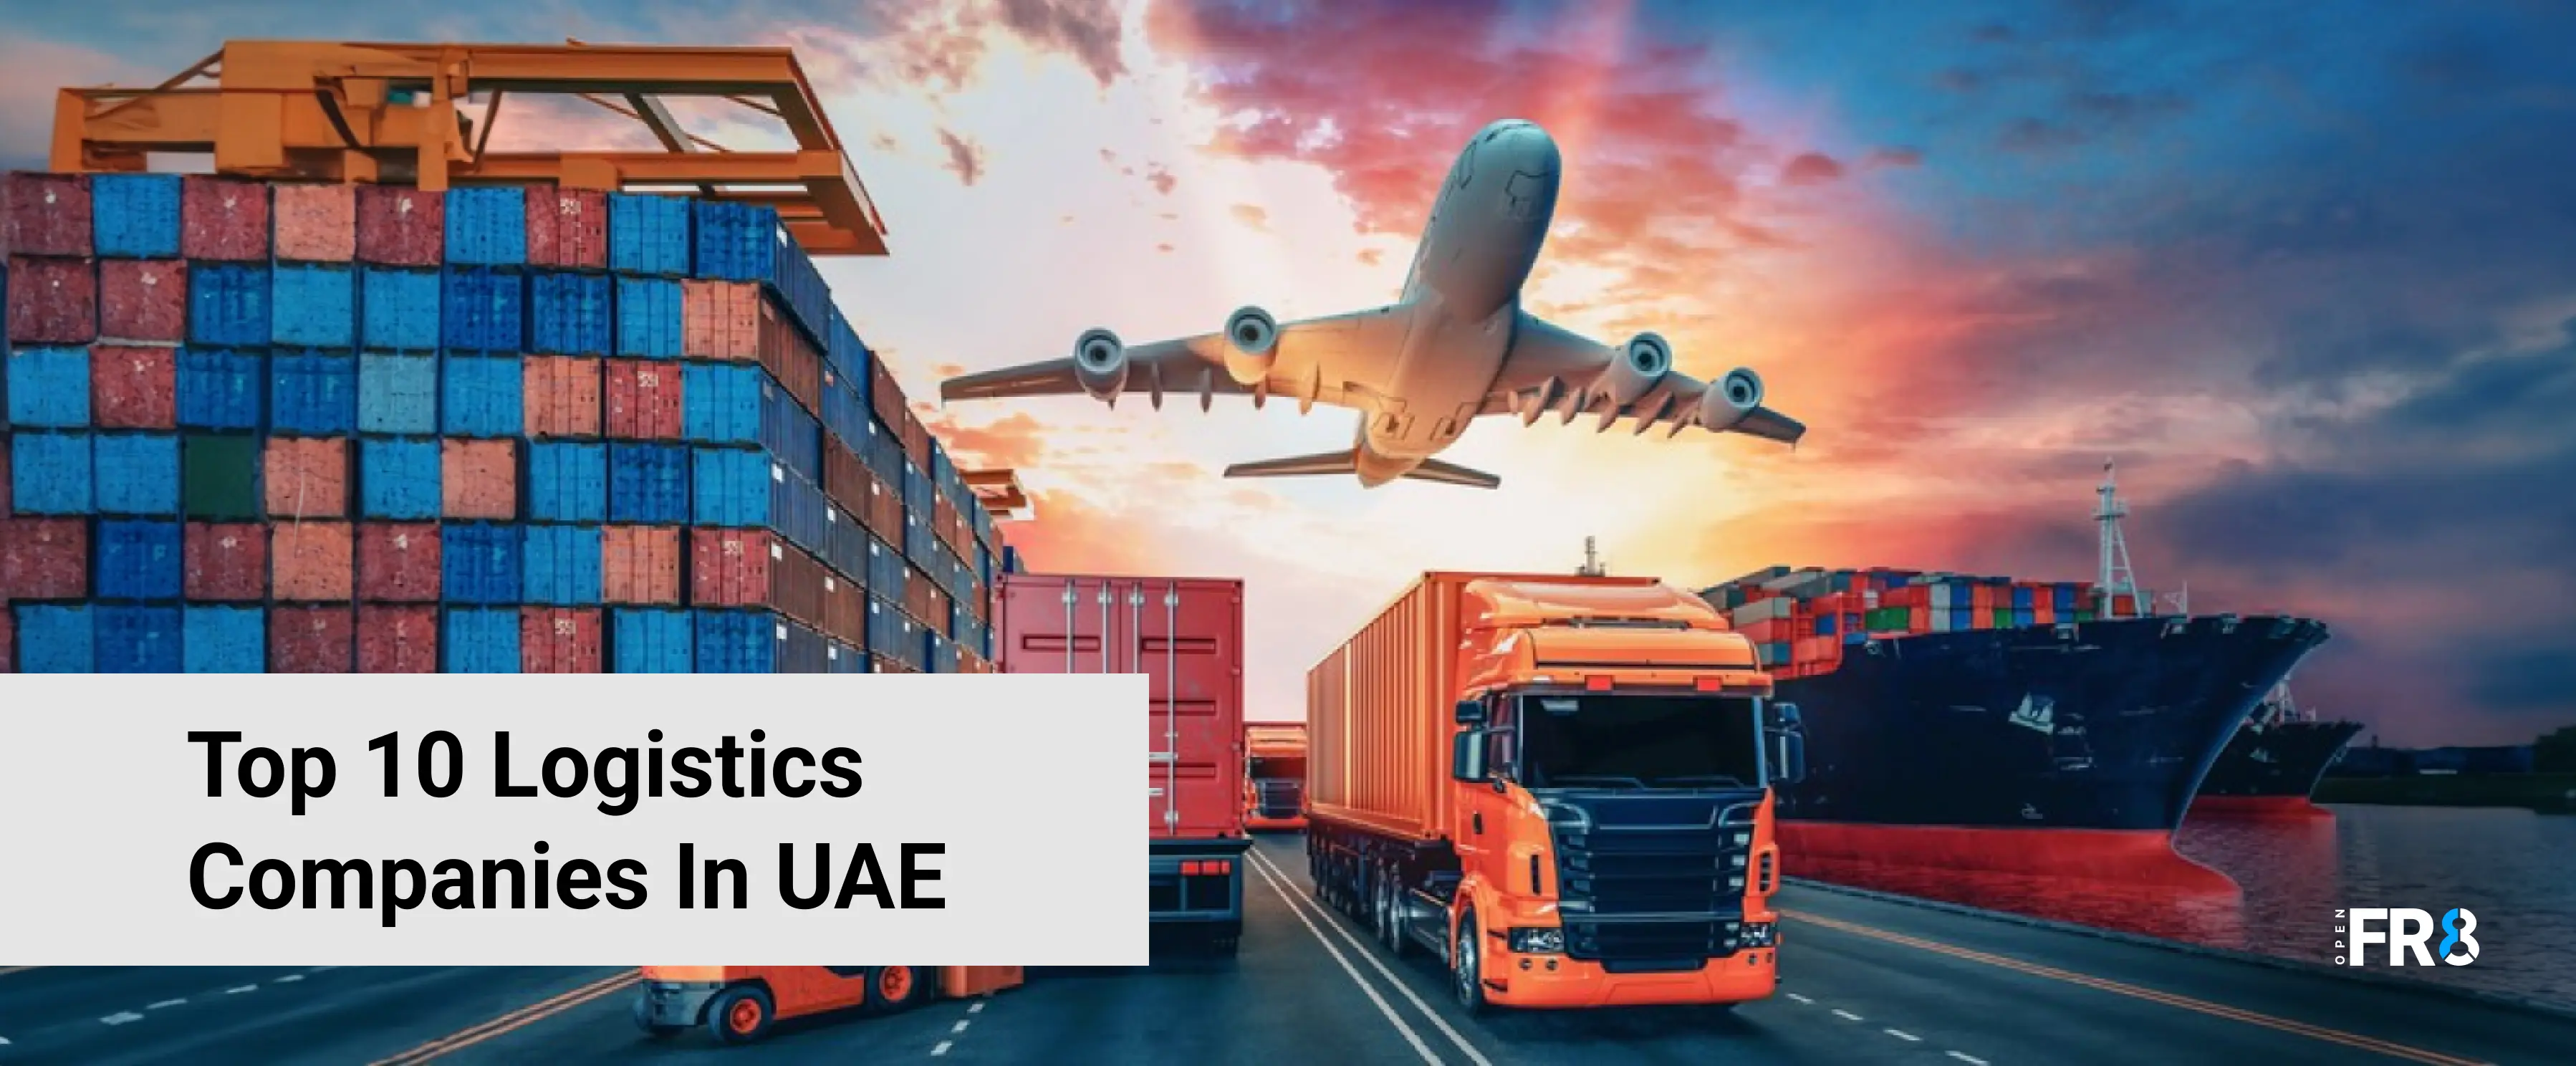 Top 10 Logistics Companies in the UAE